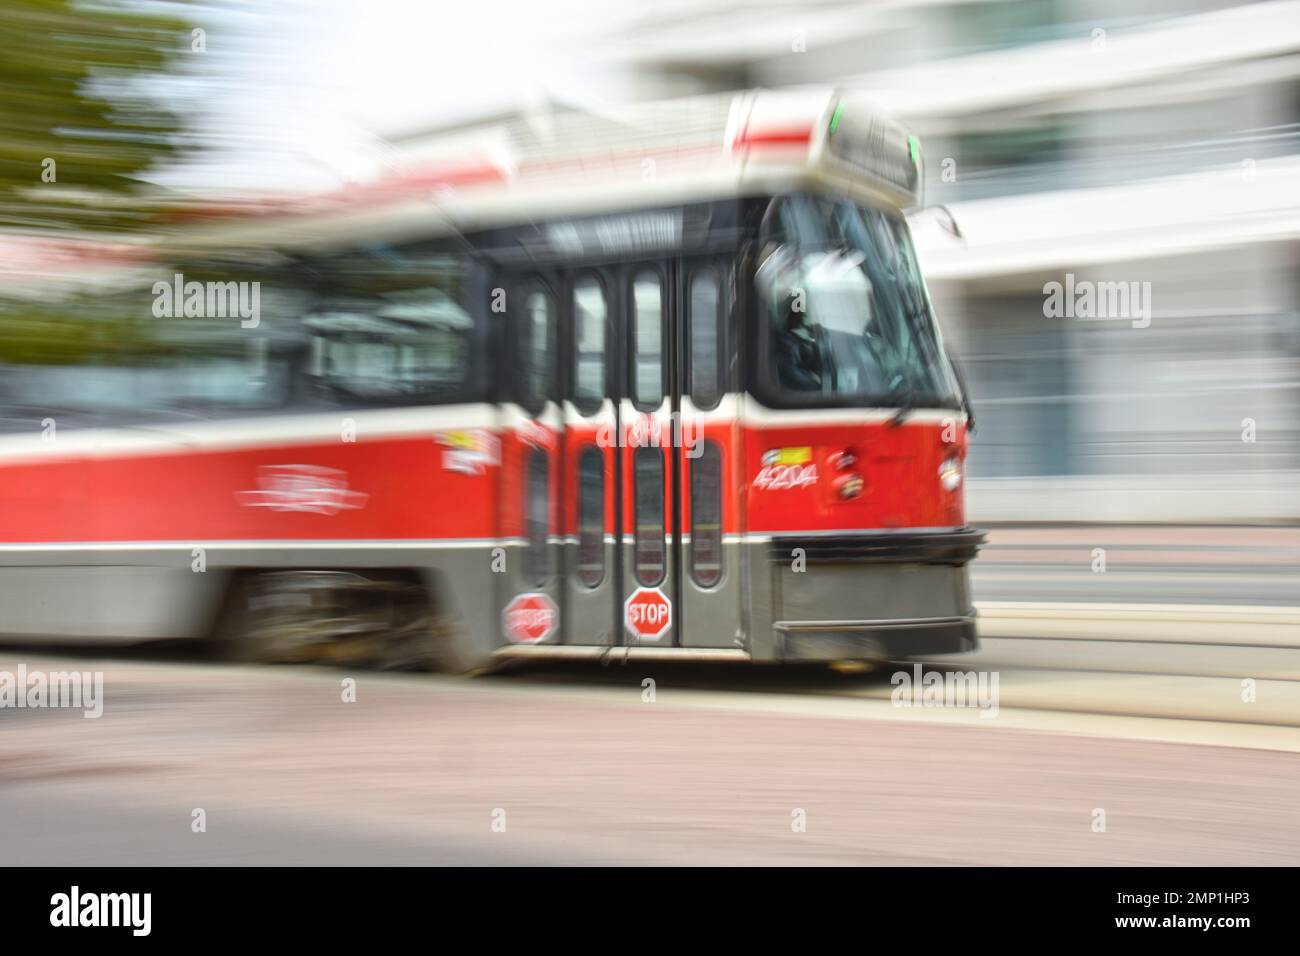 Streetcar in blurred motion, Toronto, Canada Stock Photo